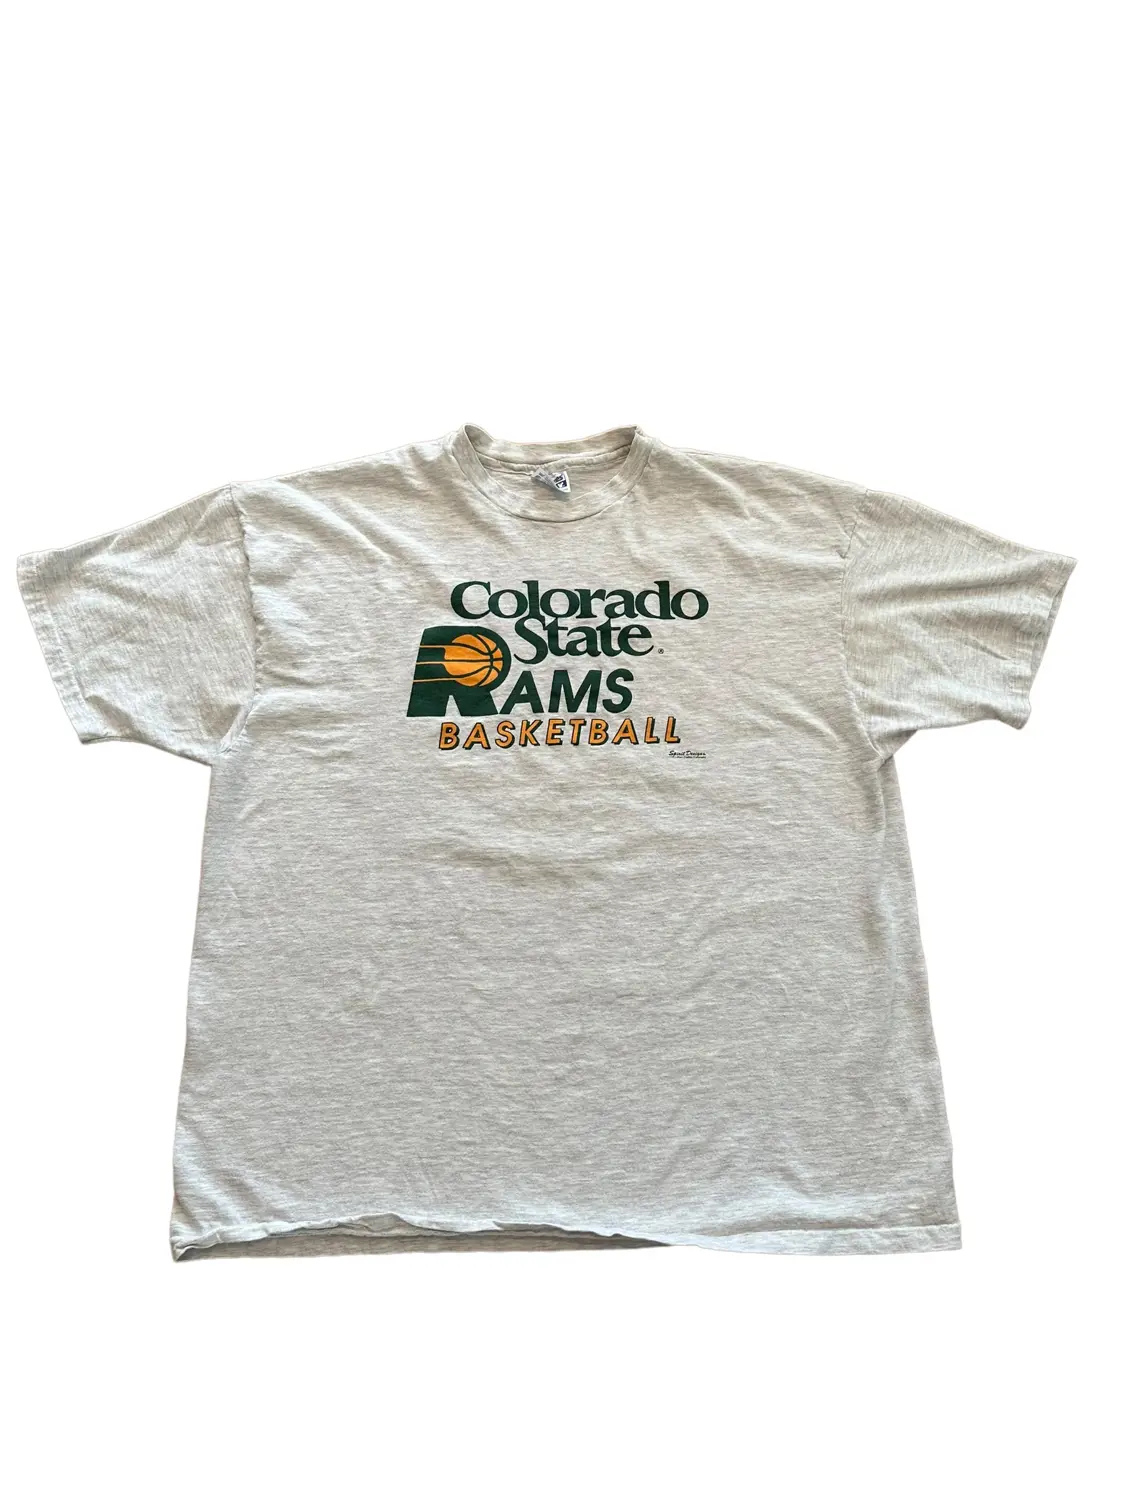 90s Colorado State Basketball T-Shirt